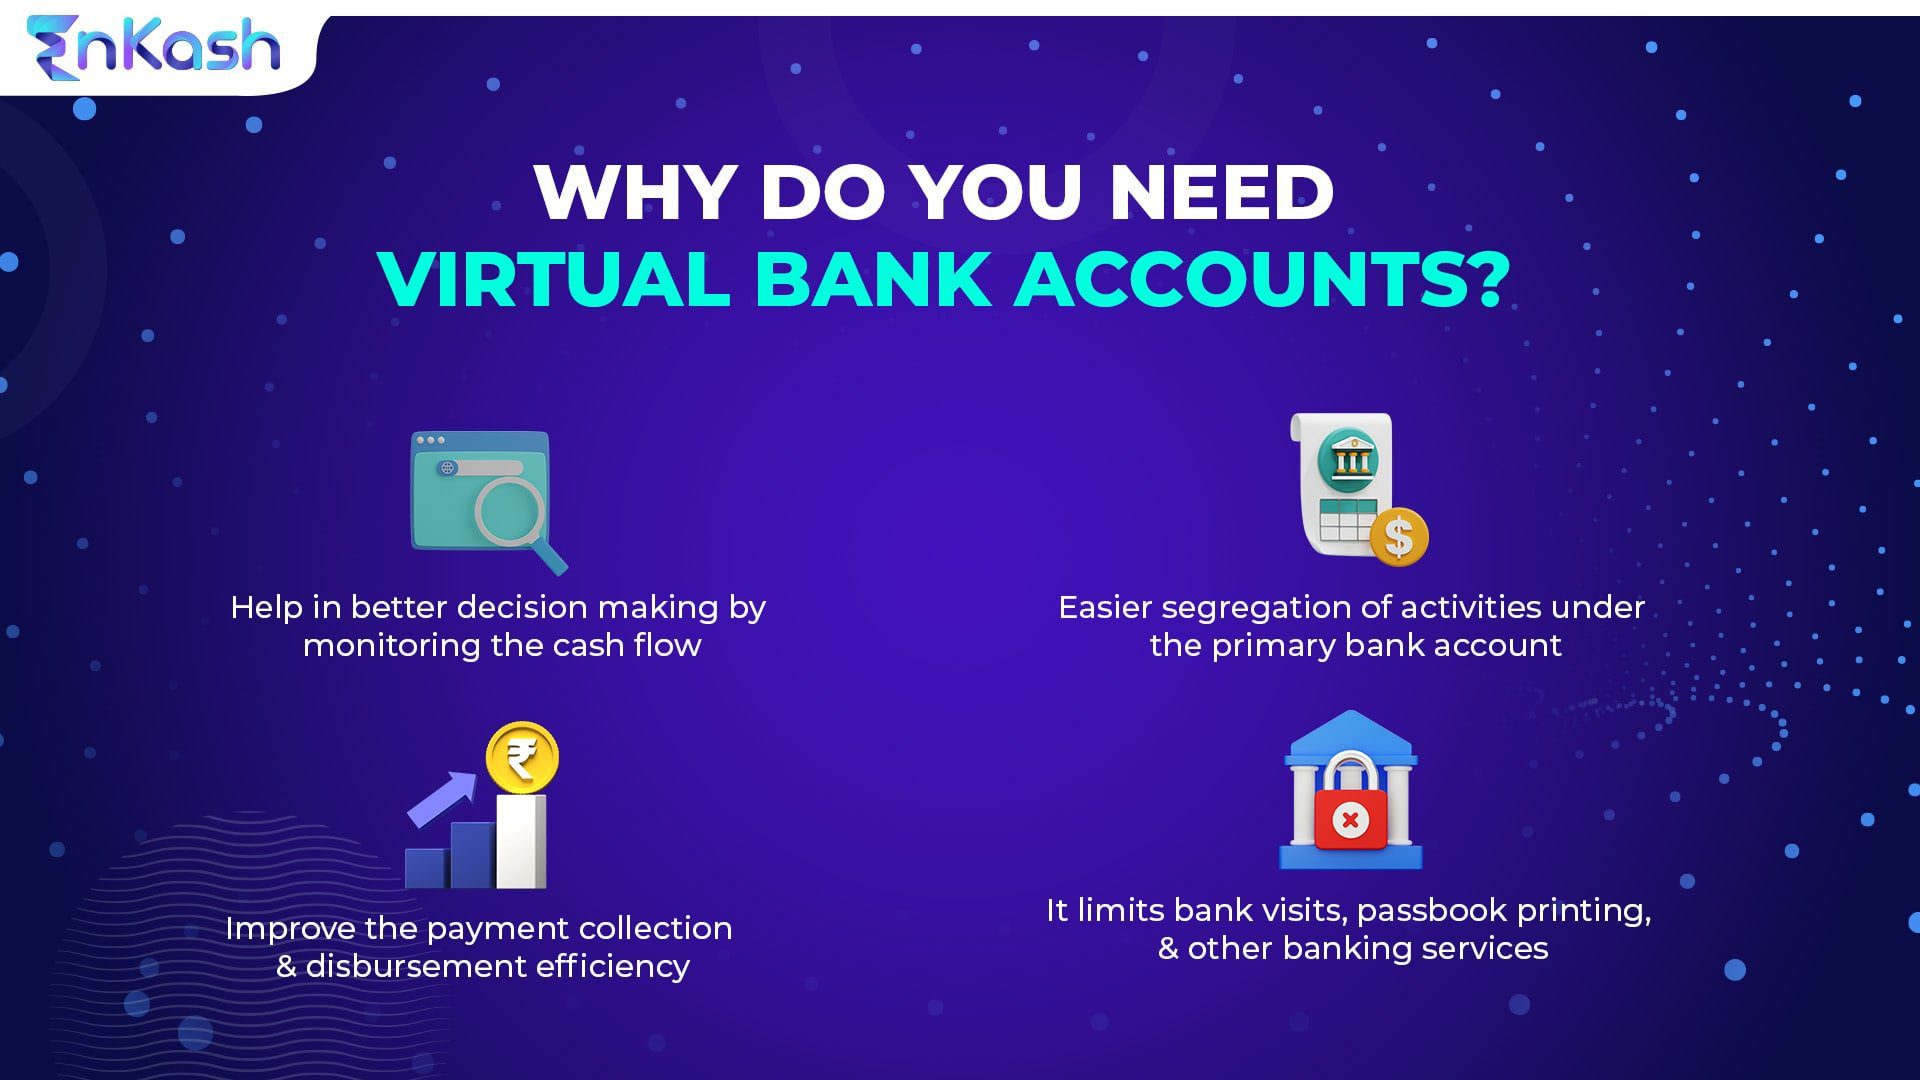 Why do you need virtual bank accounts